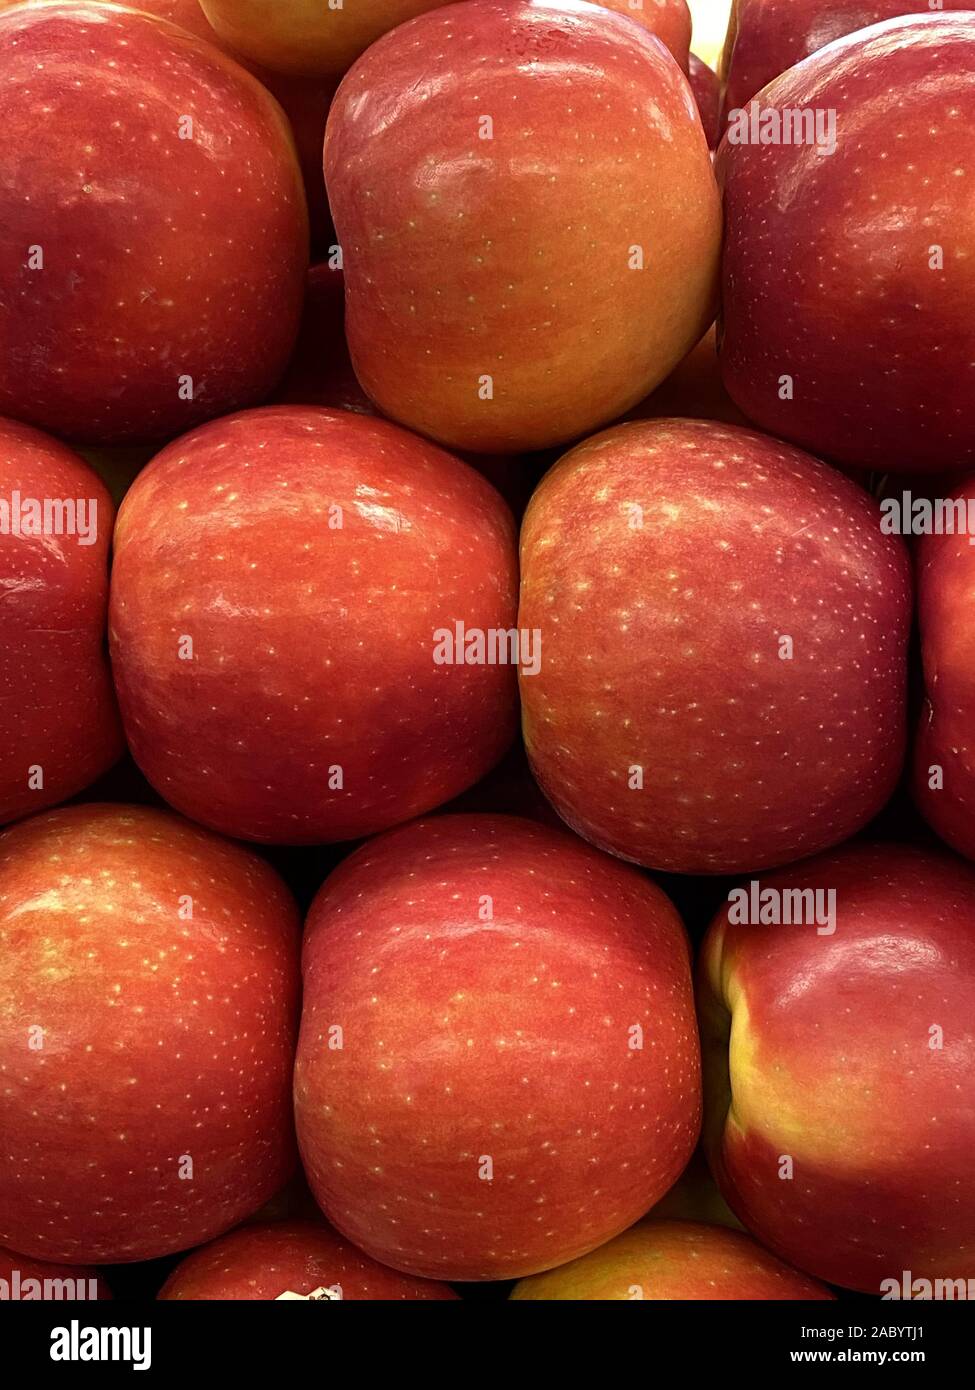 https://c8.alamy.com/comp/2ABYTJ1/apples-2ABYTJ1.jpg